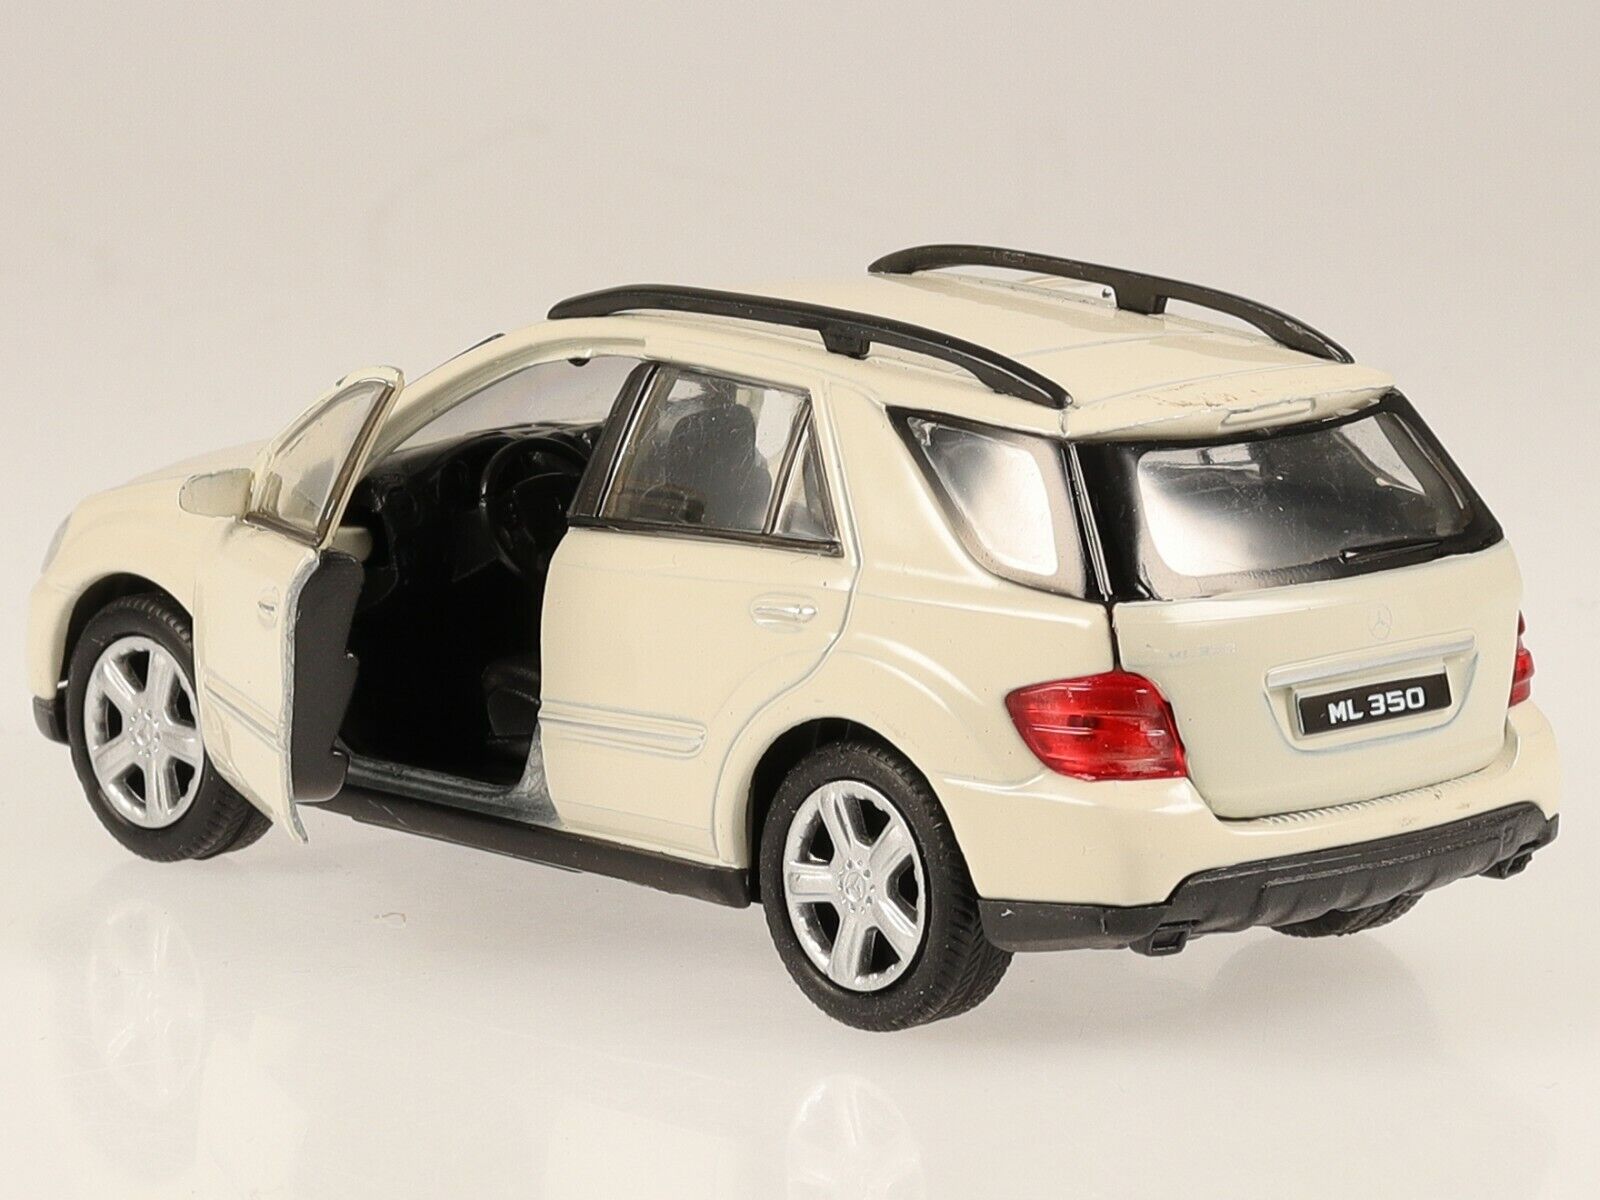 Mercedes W164 M-class ML 350 white diecast model car 42389 Welly 1:41